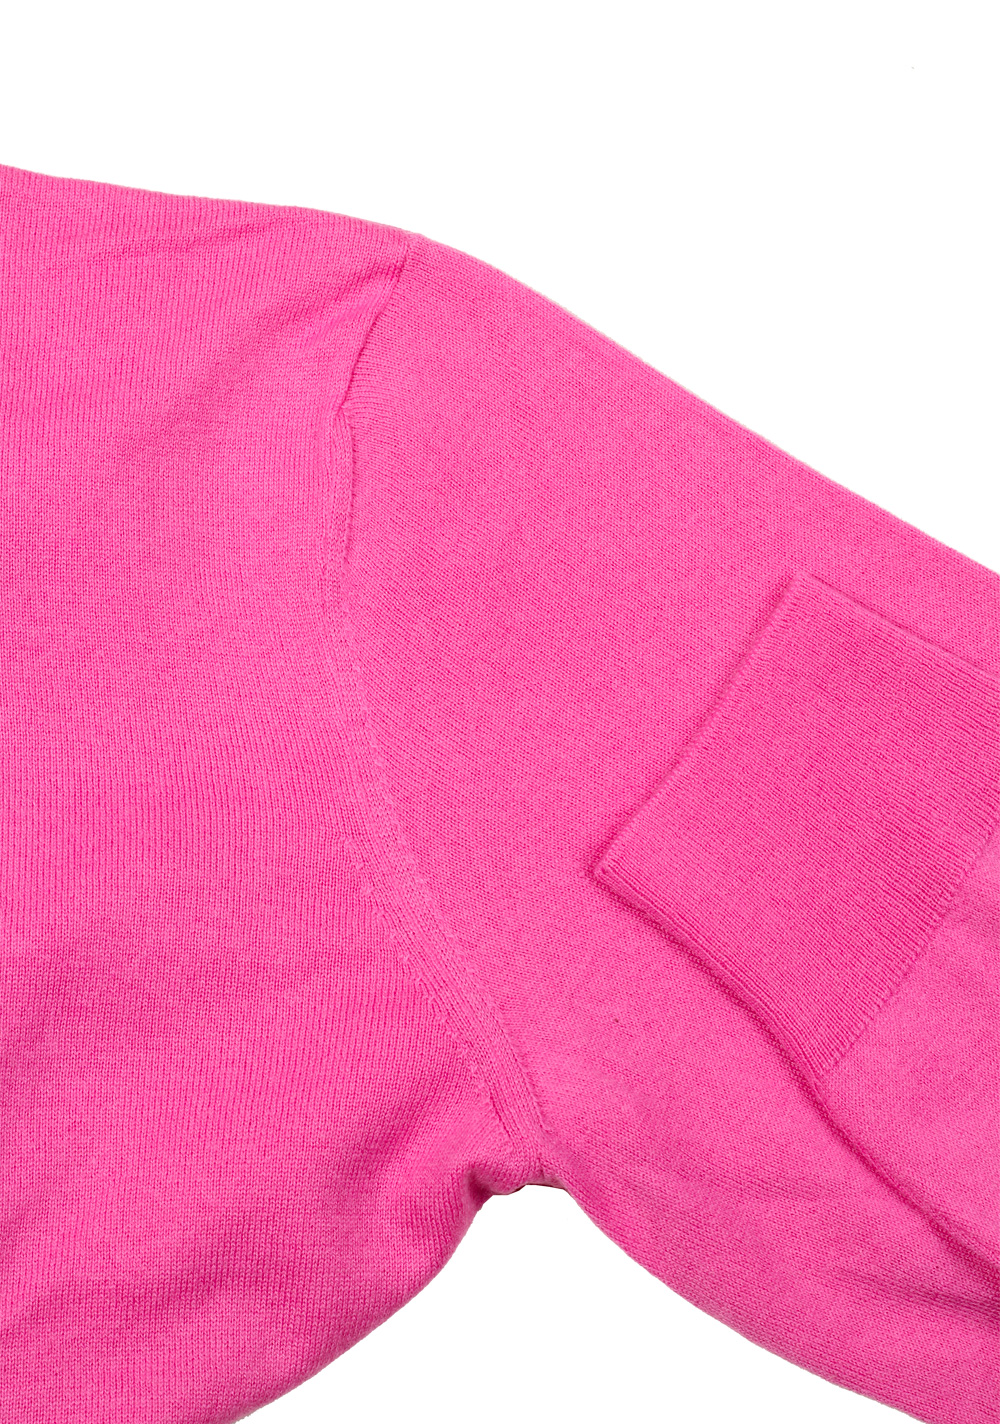 Ralph Lauren Purple Label Pink Crew Neck Sweater Size XL / 54 / 44 U.S. In Cashmere | Costume Limité